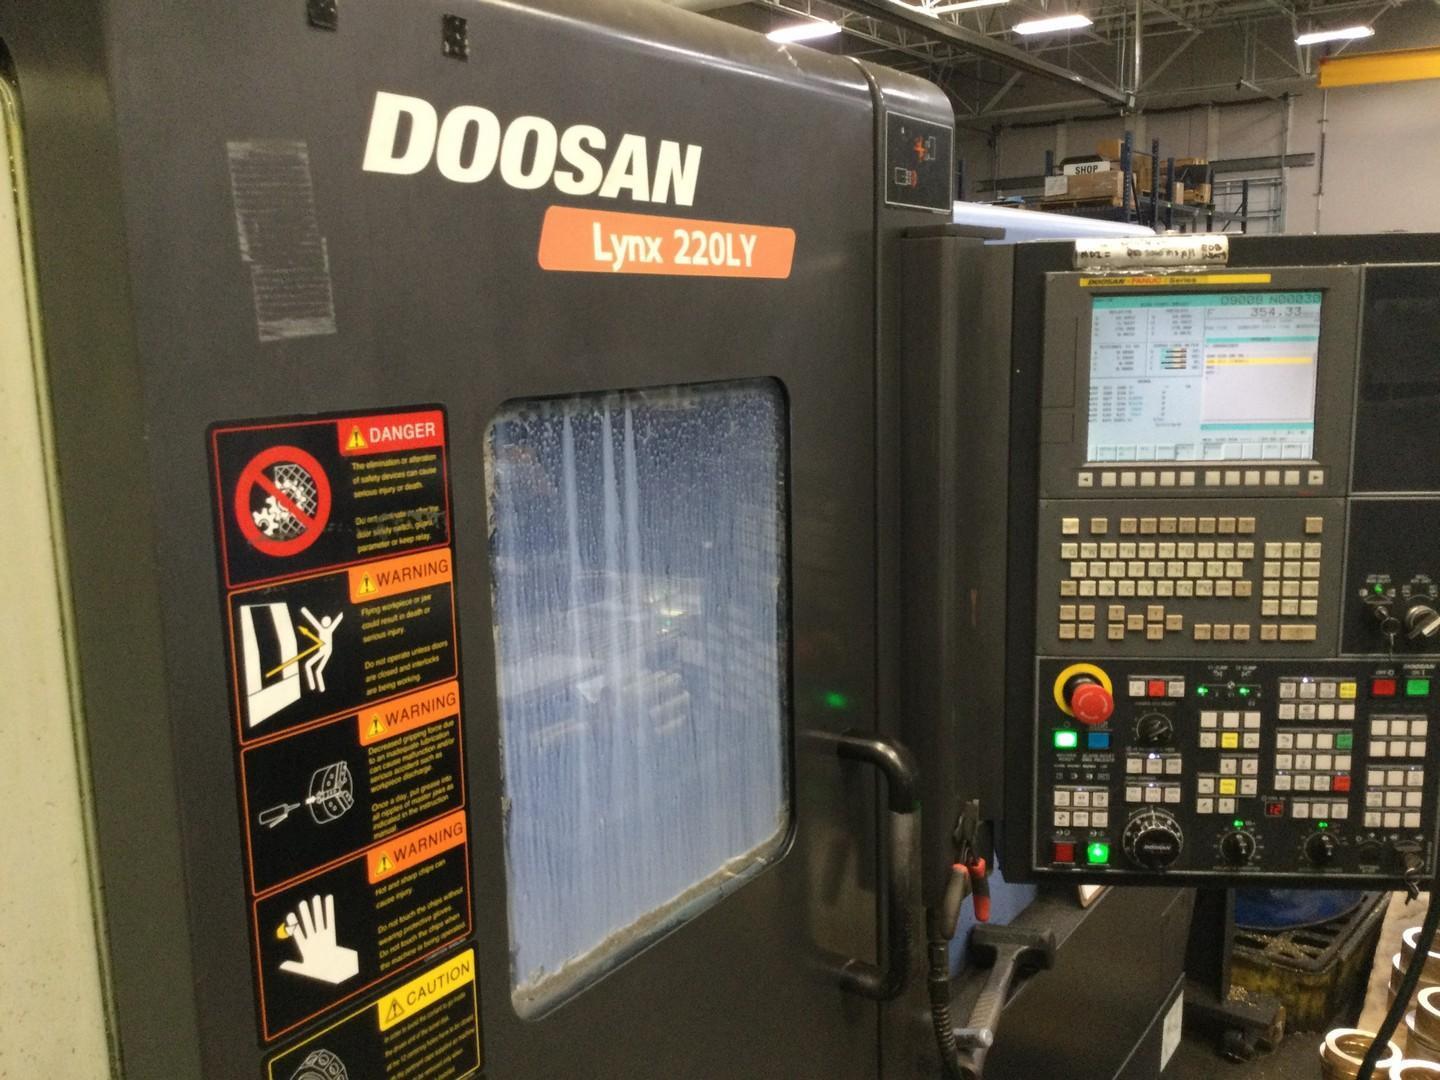 Doosan Lynx 220 LY CNC Turning Center - New 2015